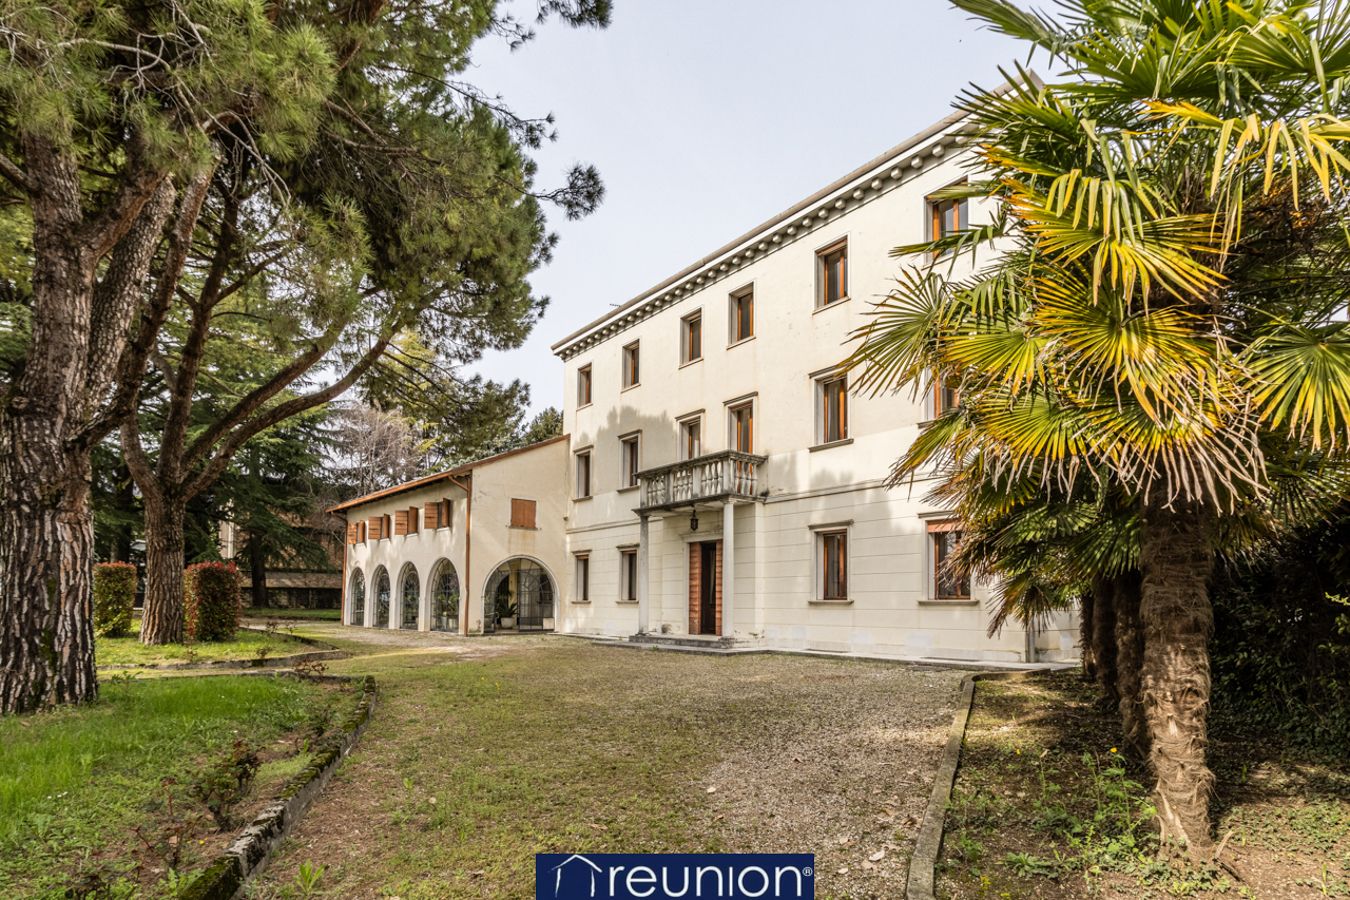 For sale villa in city Cornuda Veneto